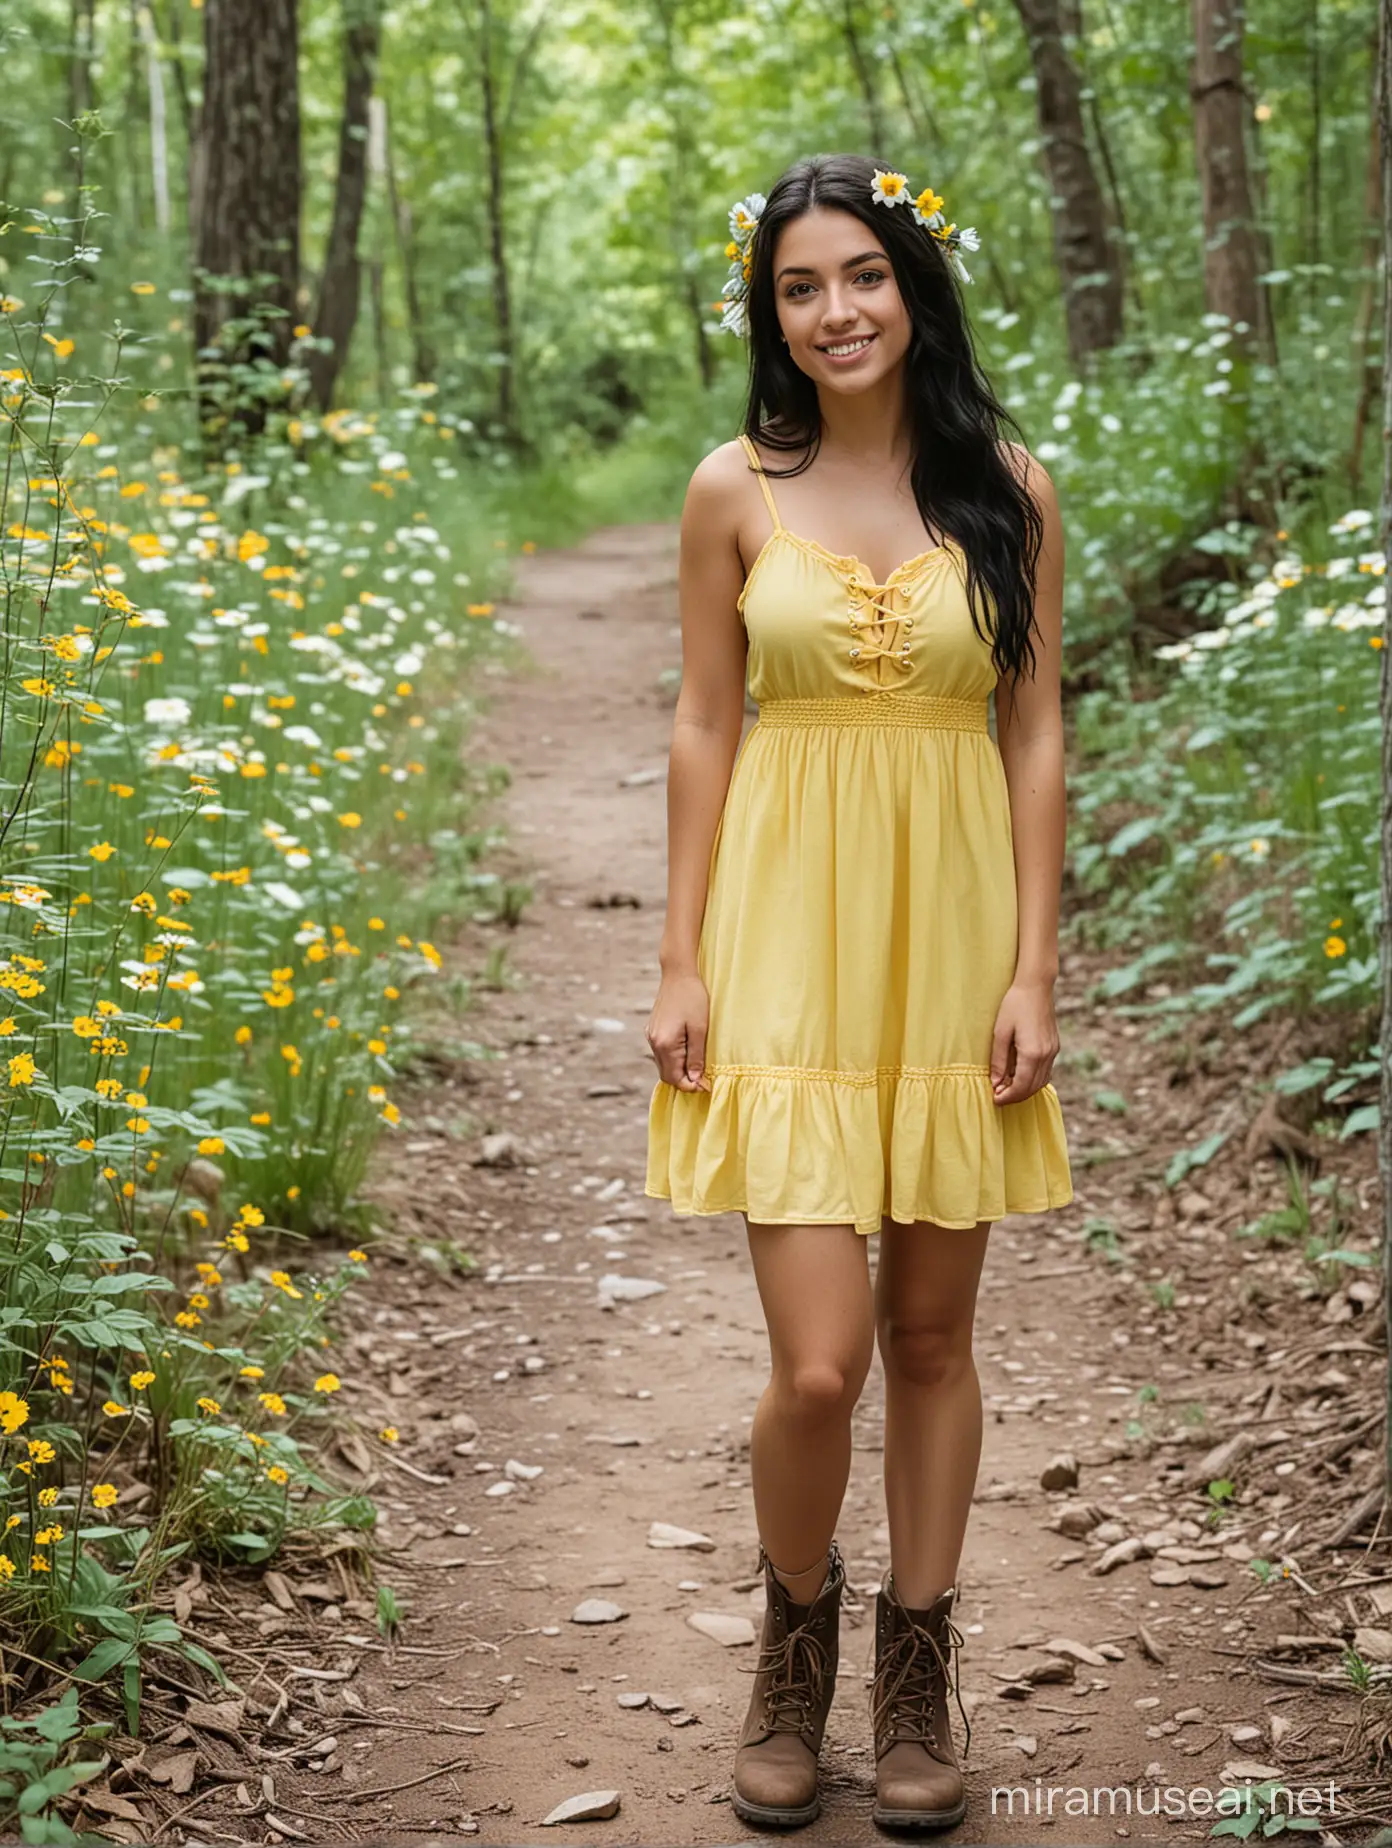 Adventurous Girl in Yellow Sundress Exploring Forest Trail